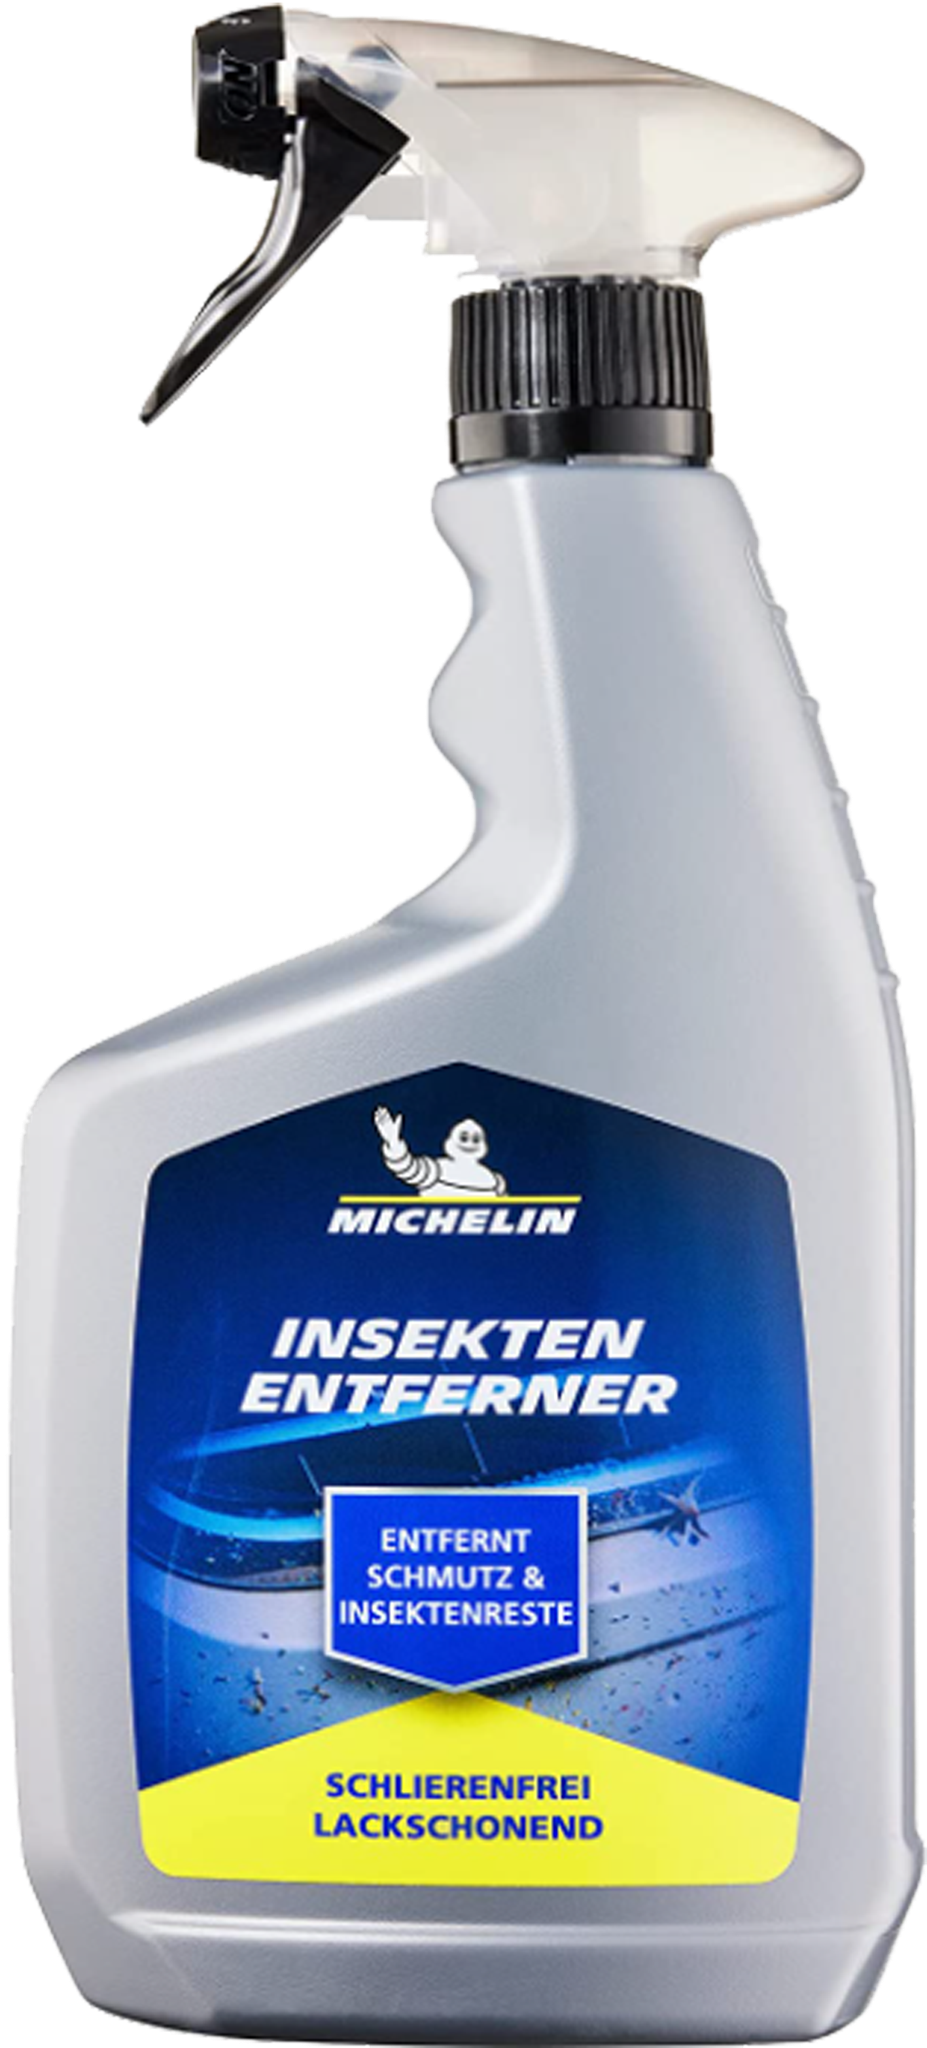 Picture of Insektenentferner